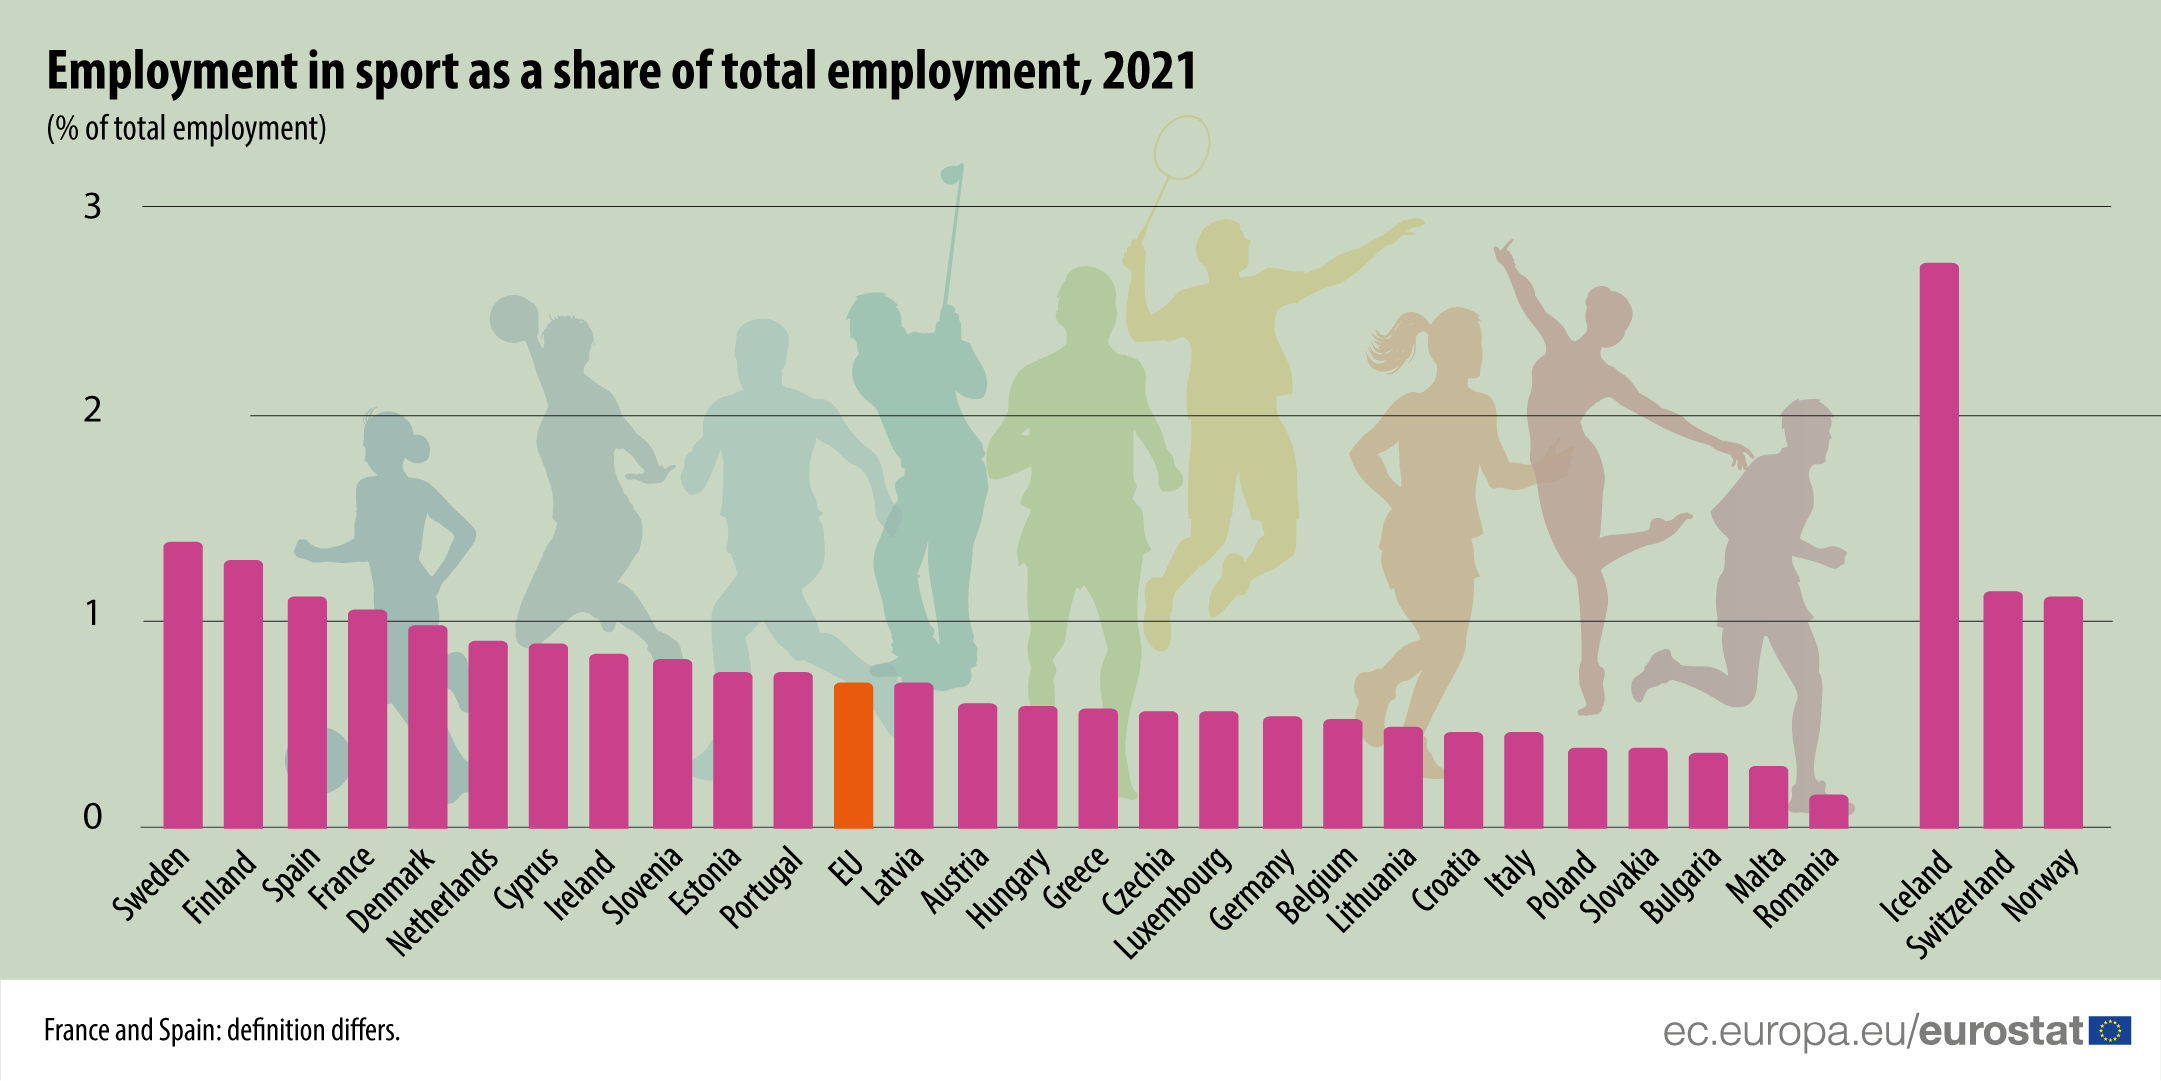 Stĺpcový graf: Podiel zamestnanosti v športe na celkovej zamestnanosti, % celkovej zamestnanosti, 2021